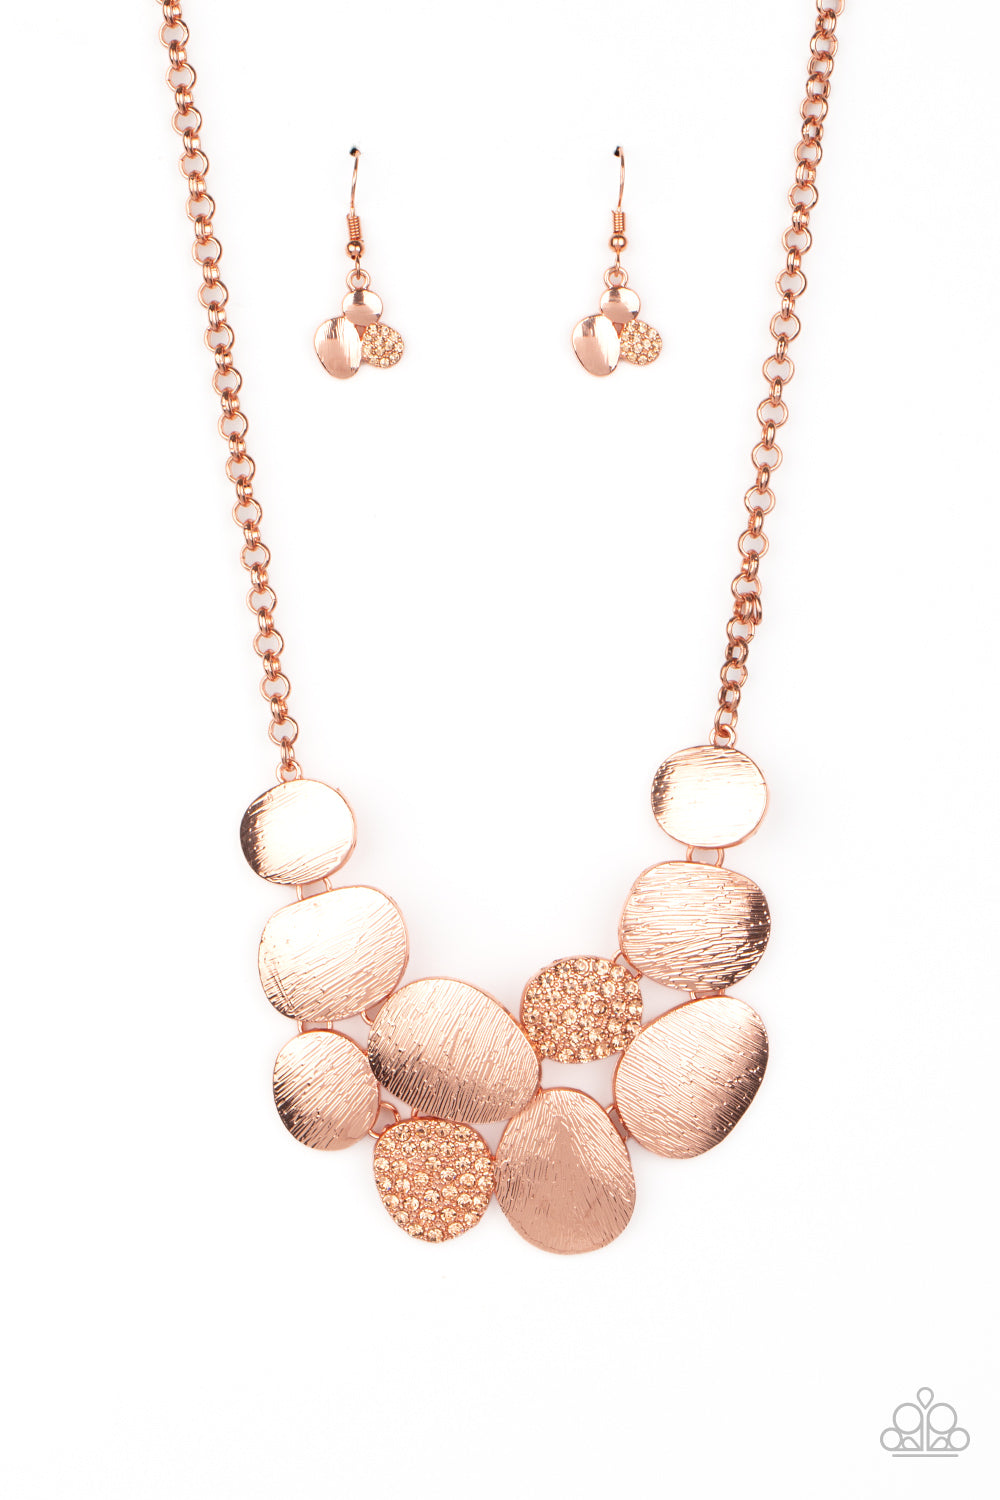 A Hard LUXE Story - Copper Necklace Set & Tough LUXE - Copper Bracelet - Combo - Princess Glam Shop